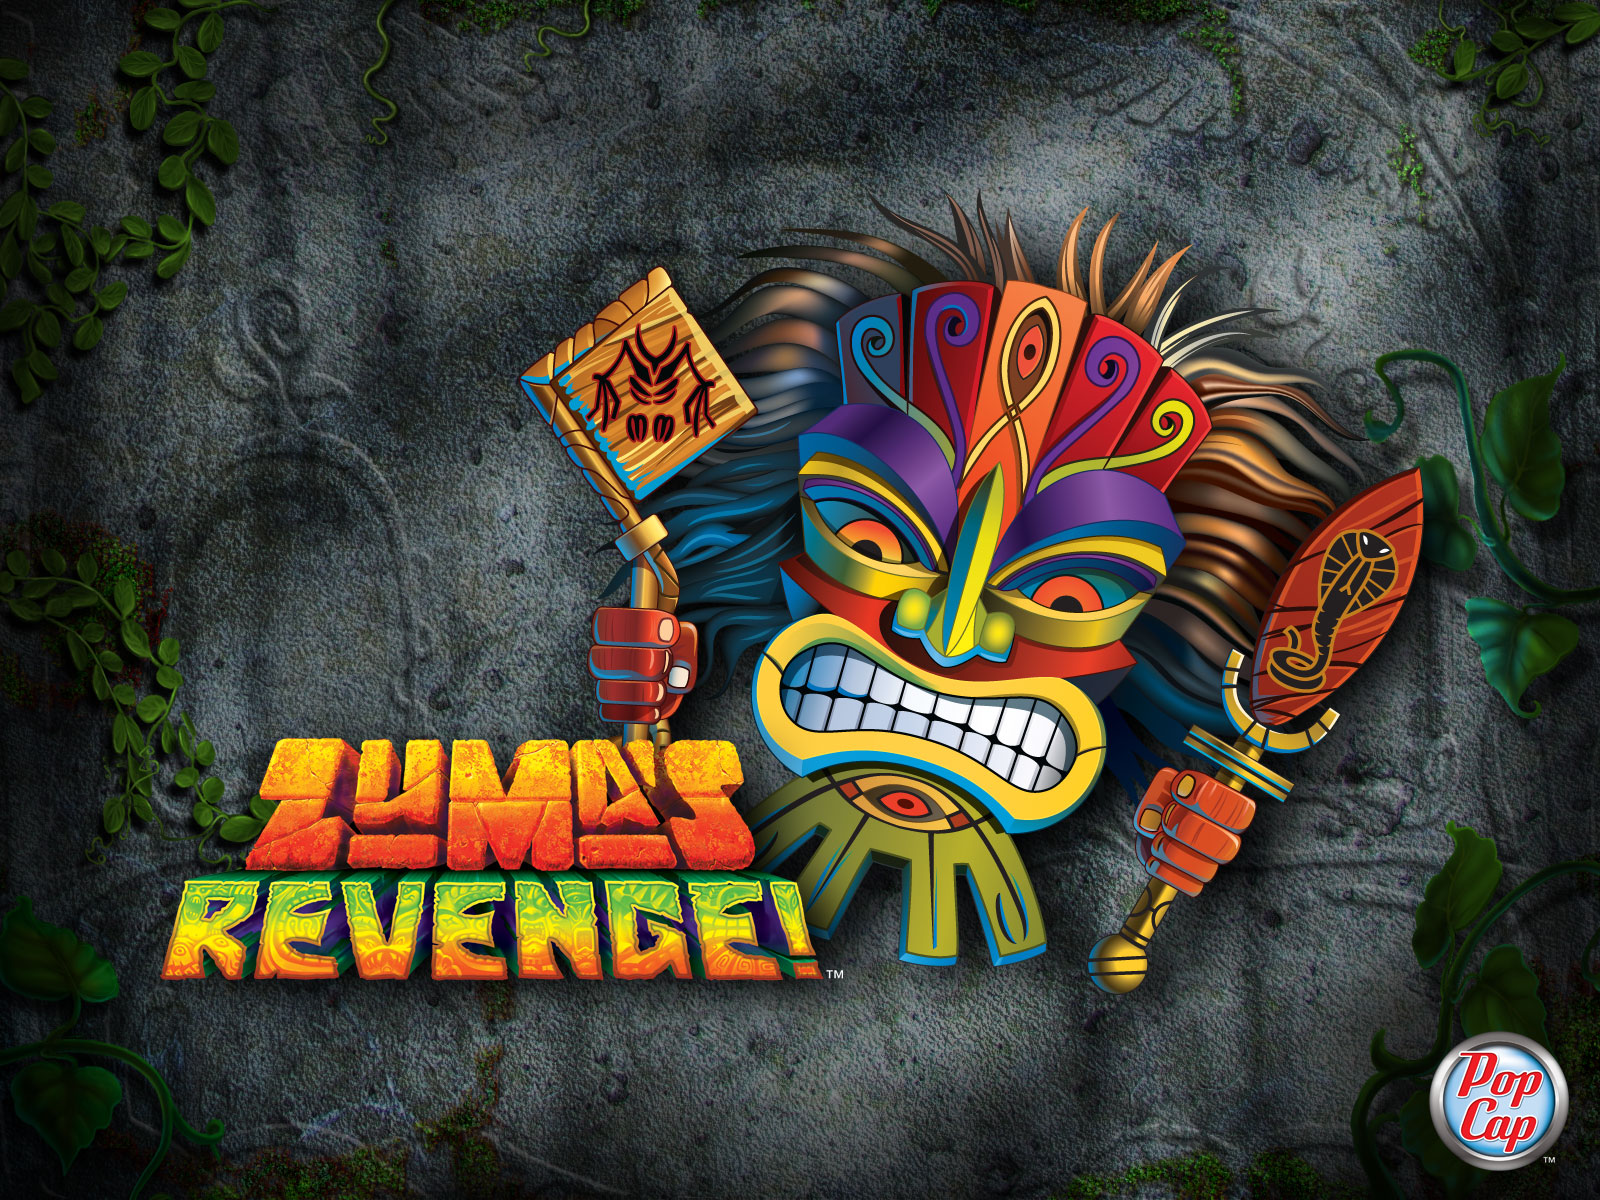 zuma revenge offline free download